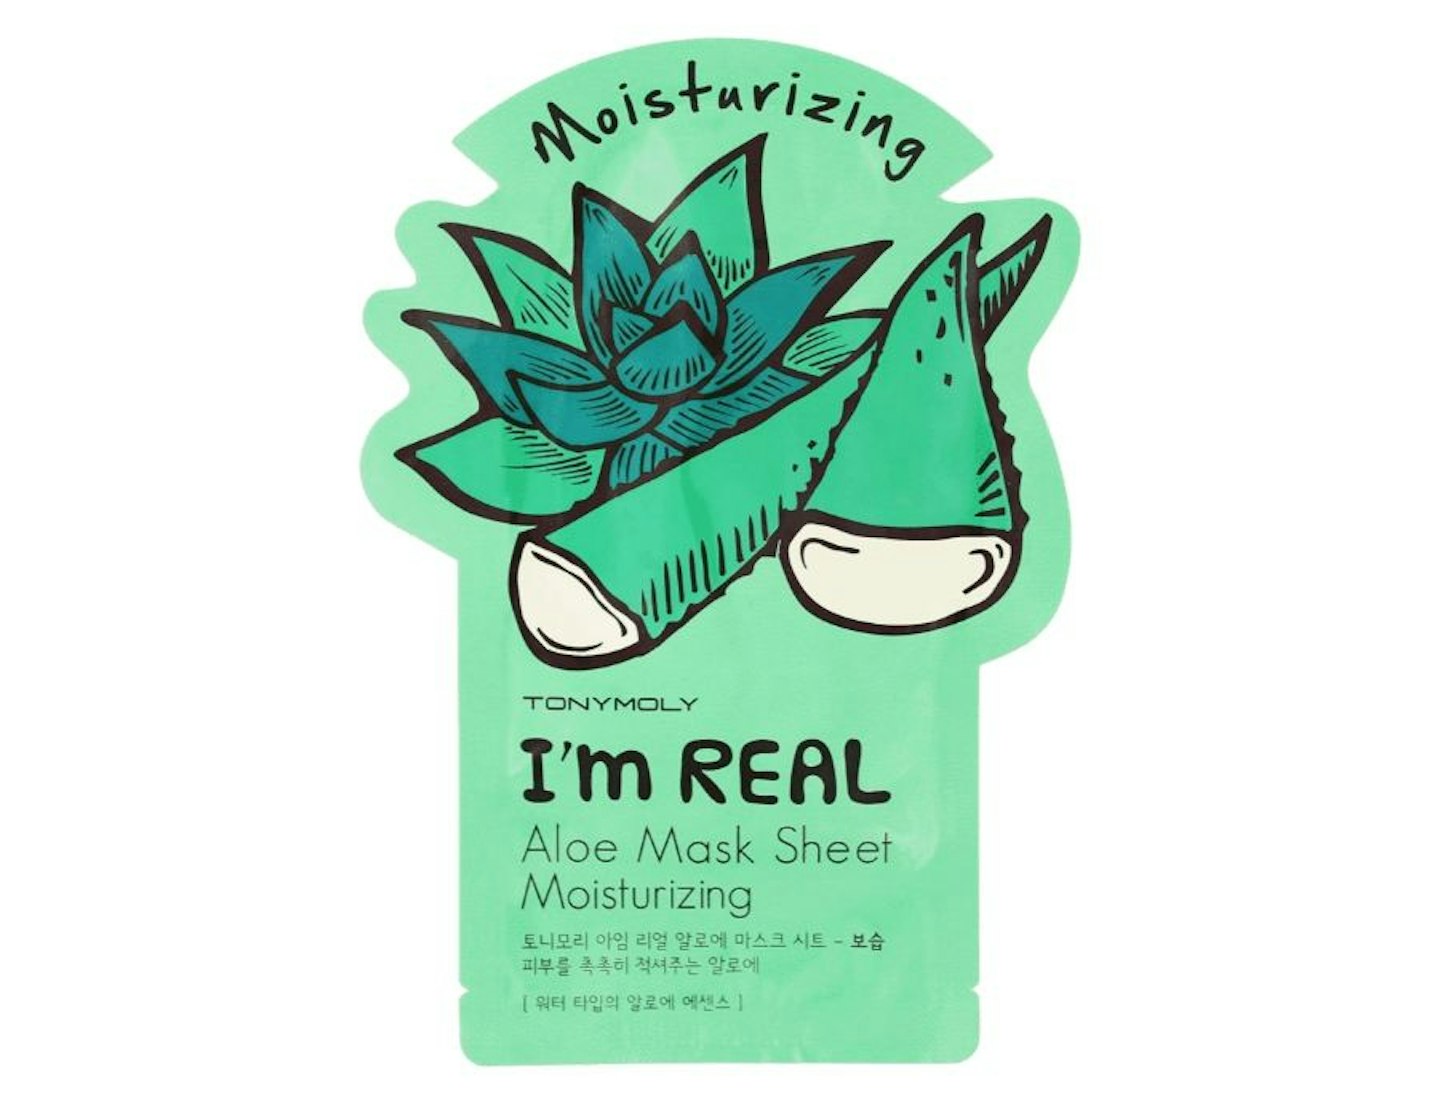 Tonymoly I'm Aloe Sheet Mask, 5.00, boots.com